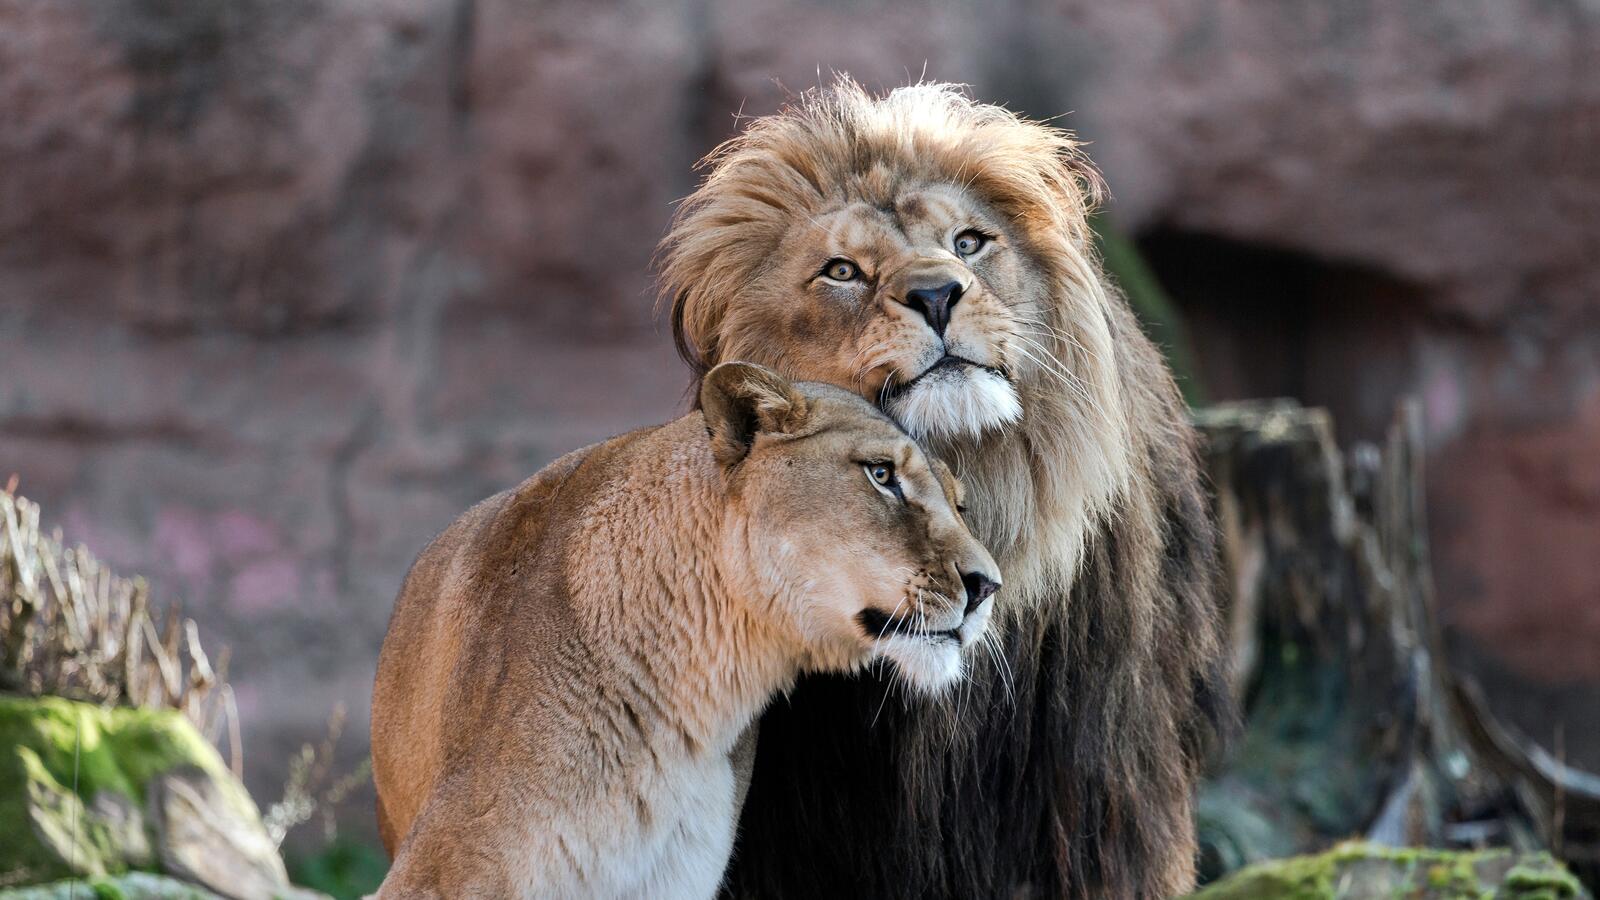 Wallpapers lion hugs predators on the desktop